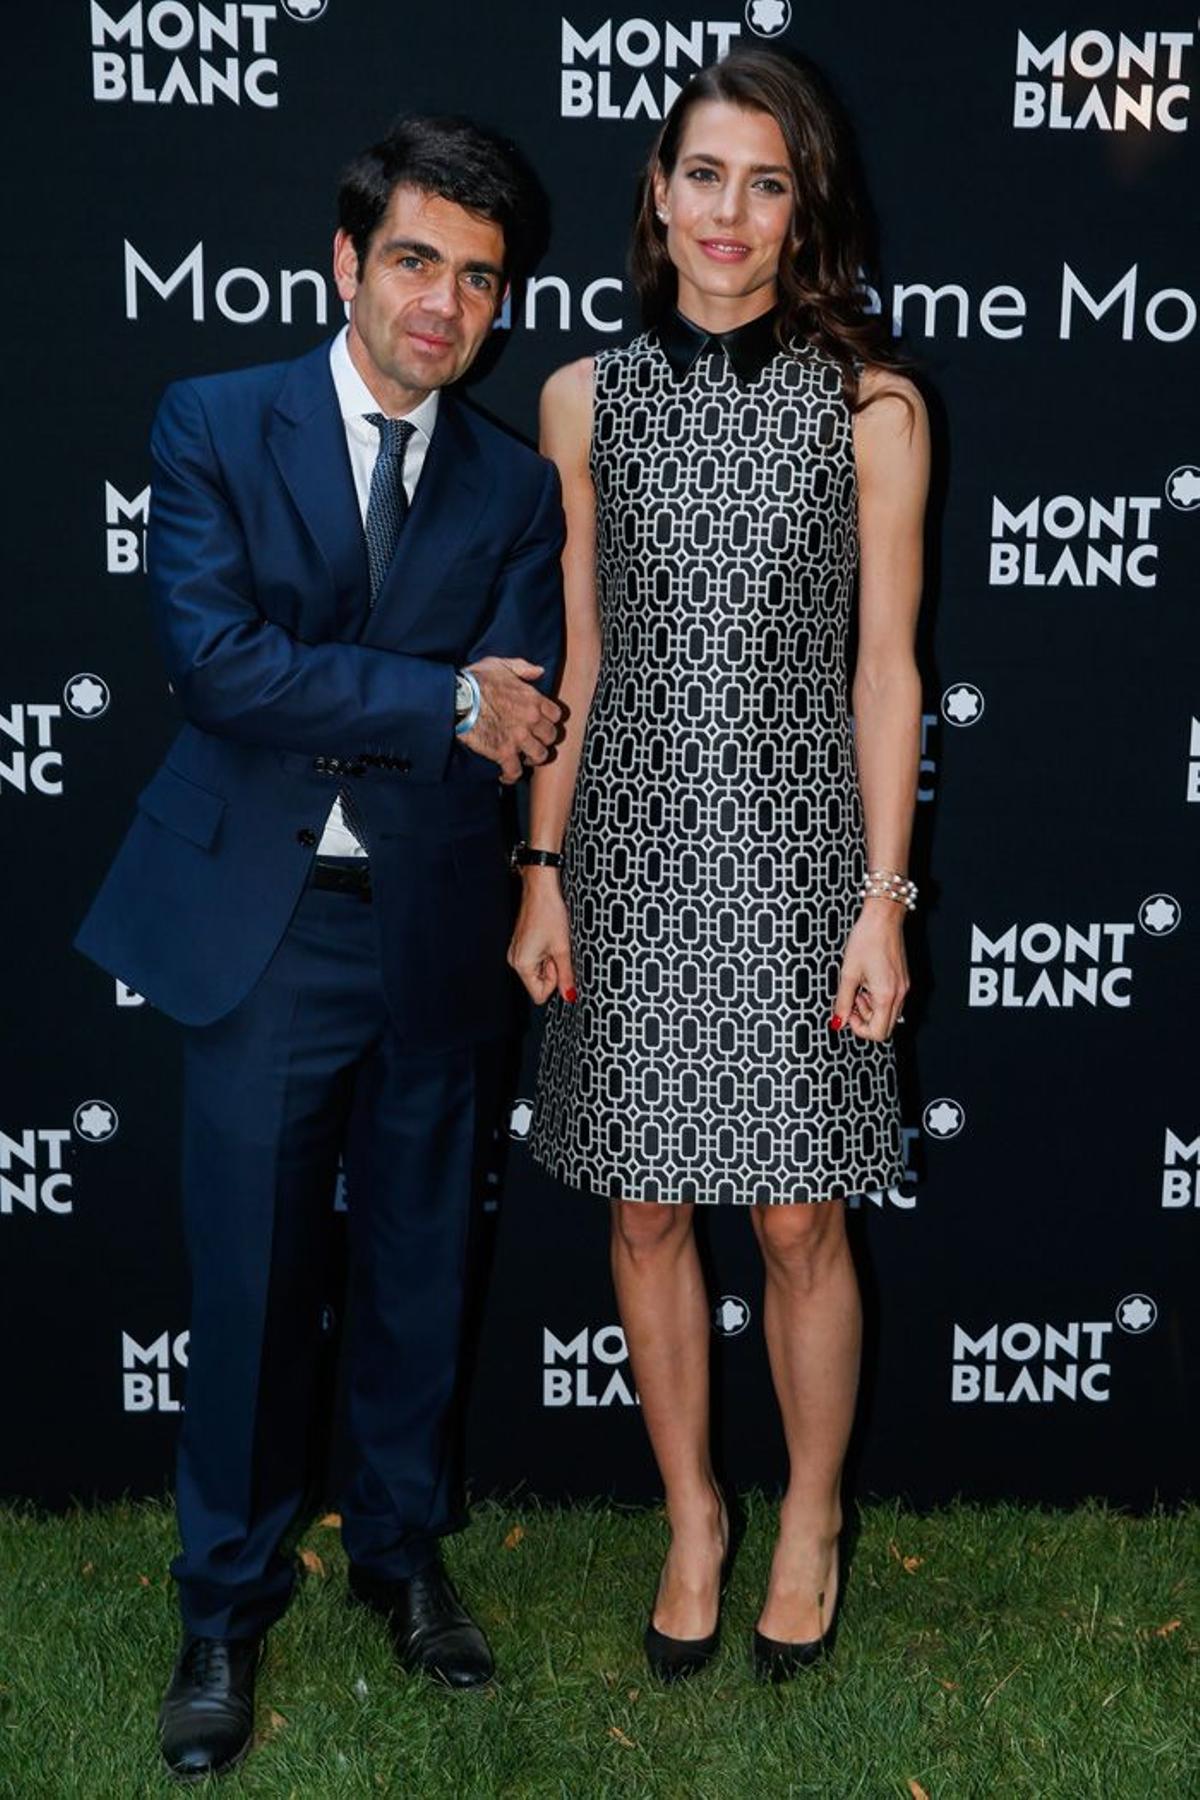 Jérôme Lambert y Carlota Casiraghi en la fiesta de Montblanc en París